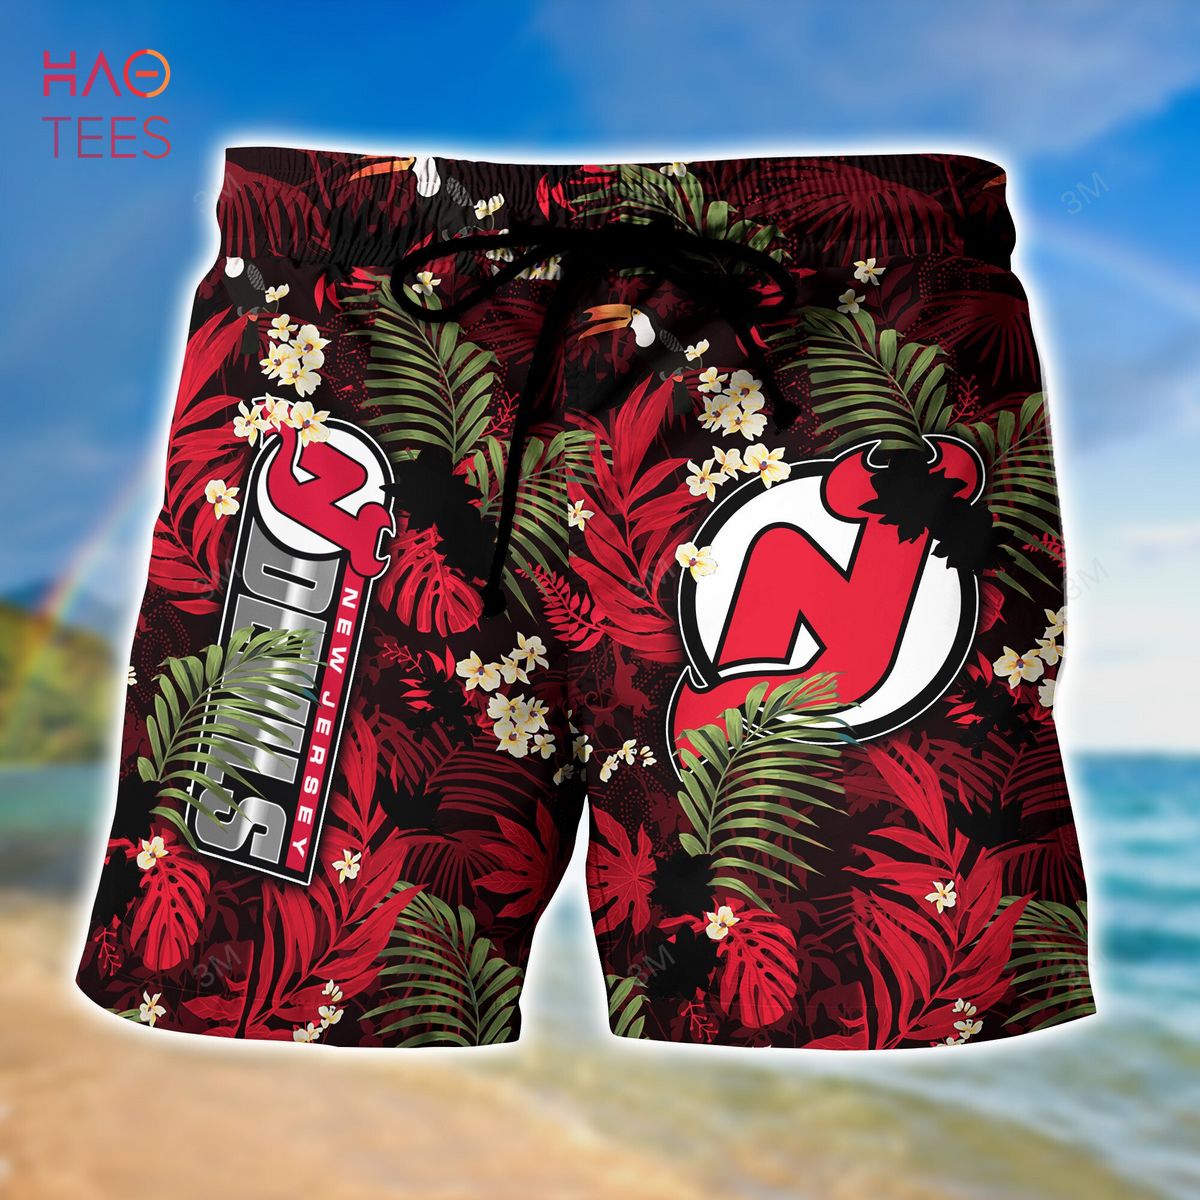 New Jersey Devils NHL Hawaiian Shirt For Men Women Fans - Freedomdesign